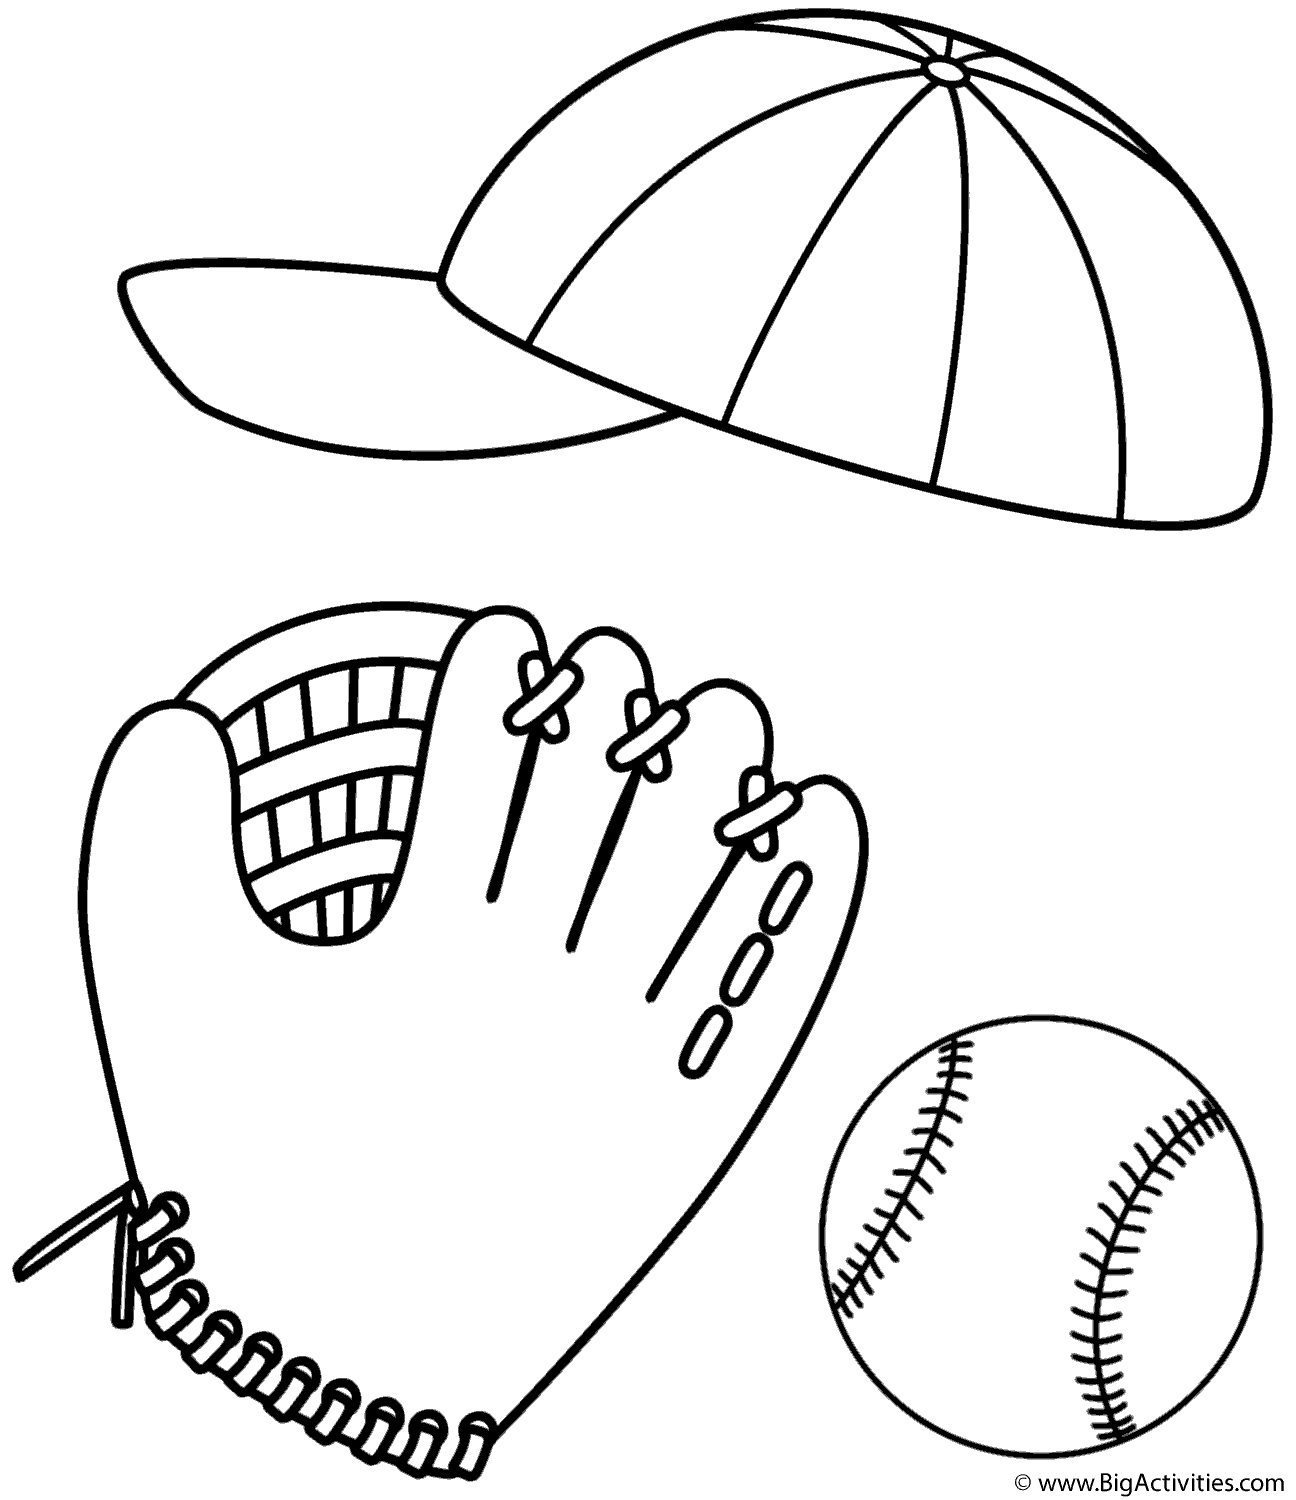 Baseball cap glove and ball